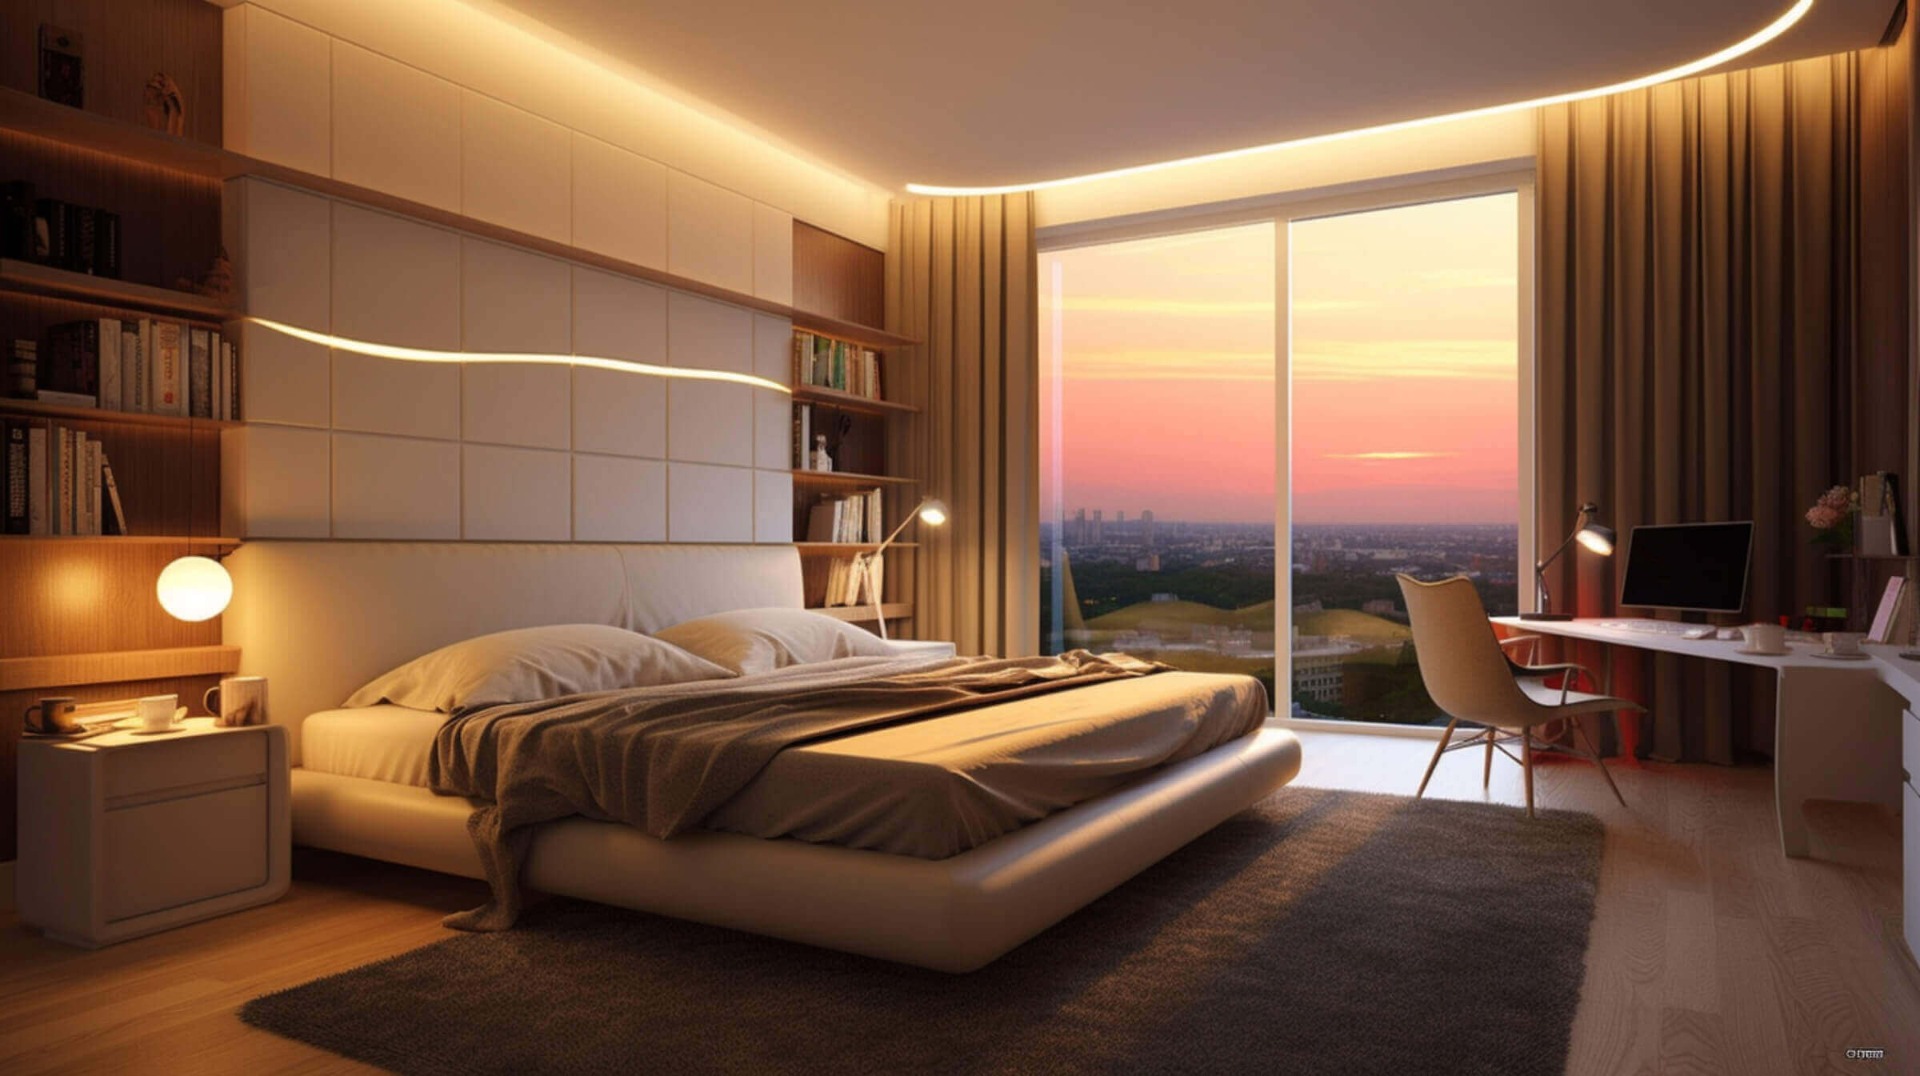 couple-bedroom-lighting-and-decor-ideas-hestya-interior-design